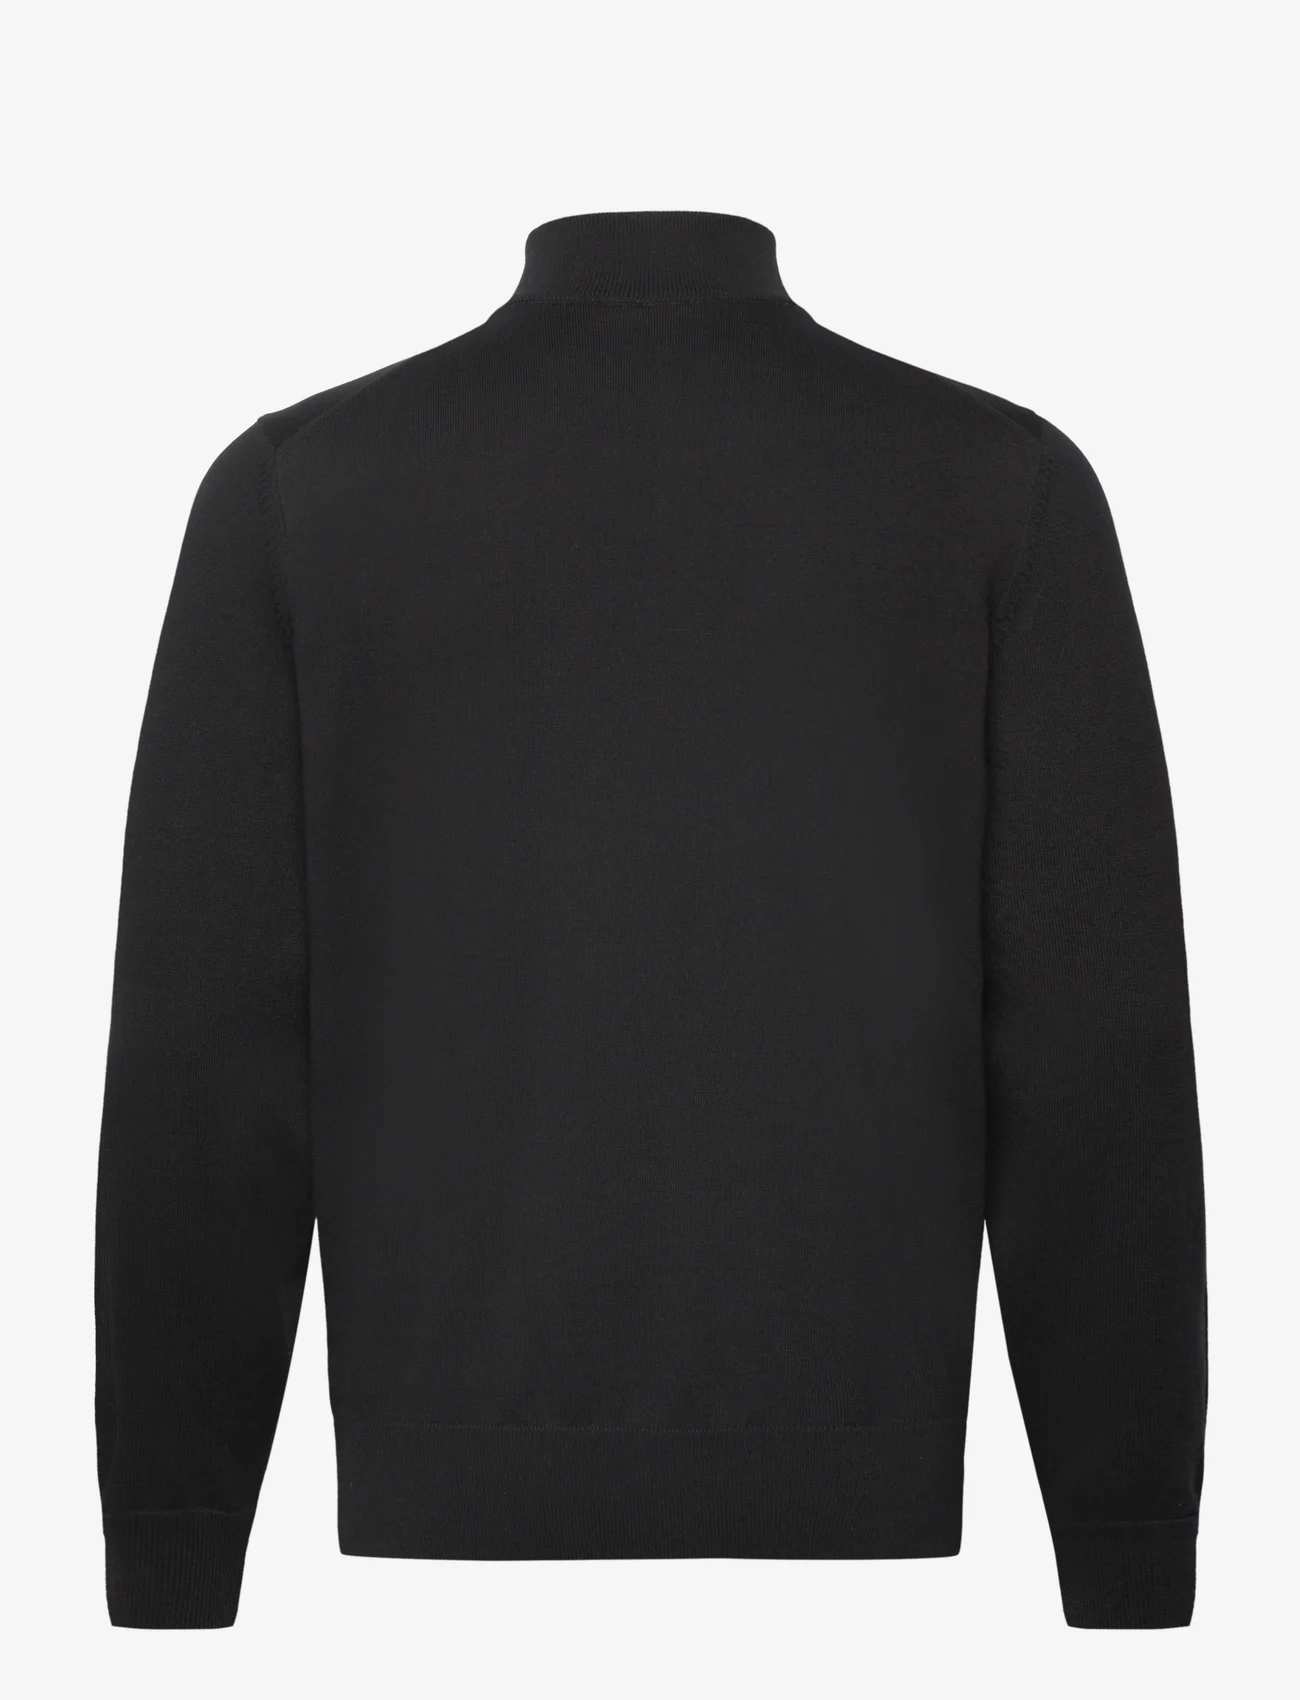 BOSS - Padro-L - pullover mit halbem reißverschluss - black - 1